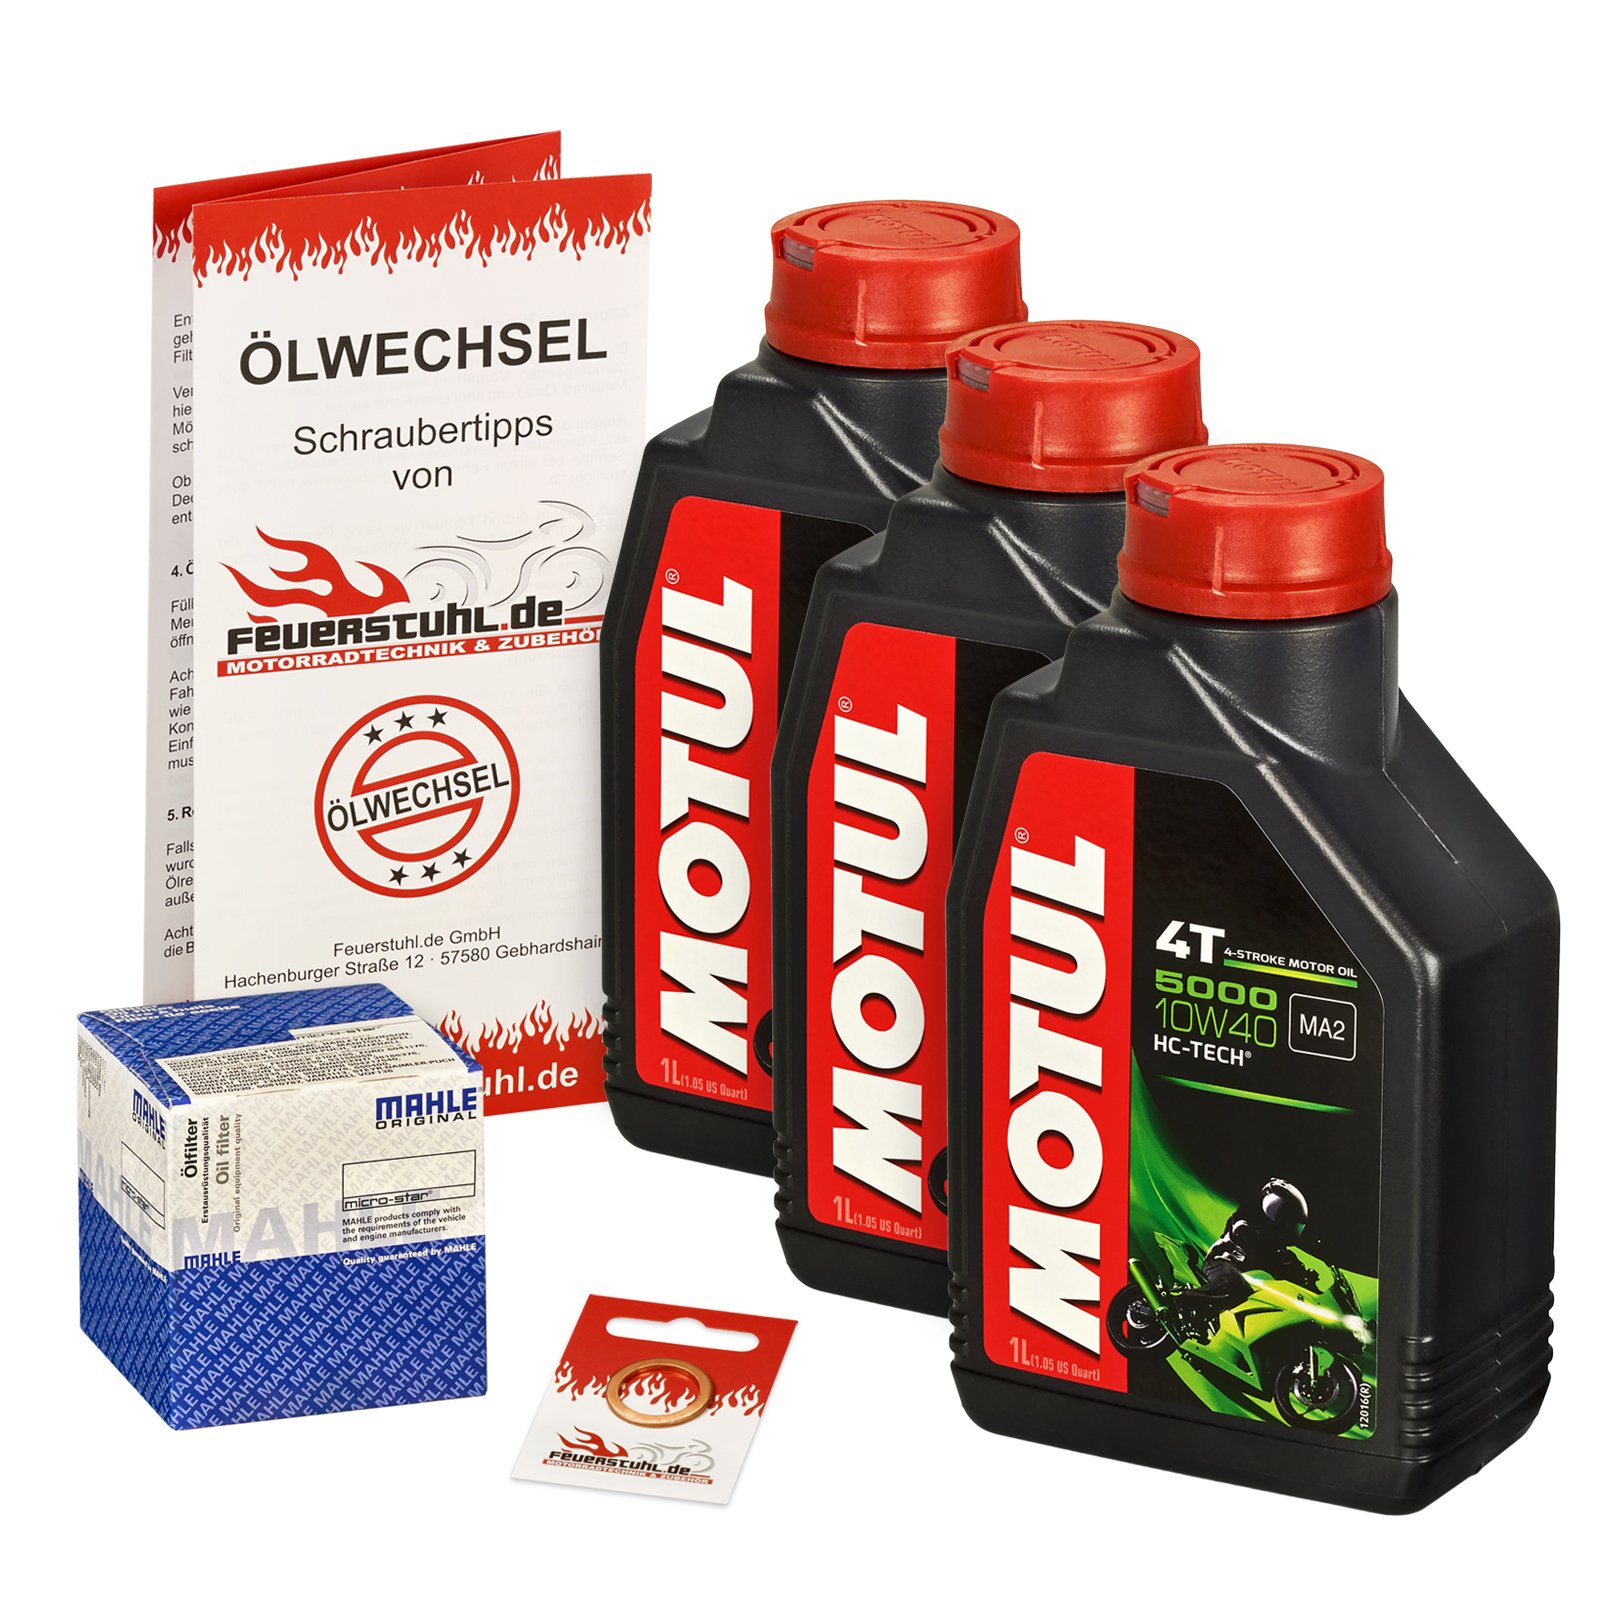 Motul 10W-40 Öl + Mahle Ölfilter für Honda SLR 650, 97-98, RD09 - Ölwechselset inkl. Motoröl, Filter, Dichtring von Feuerstuhl.de GmbH